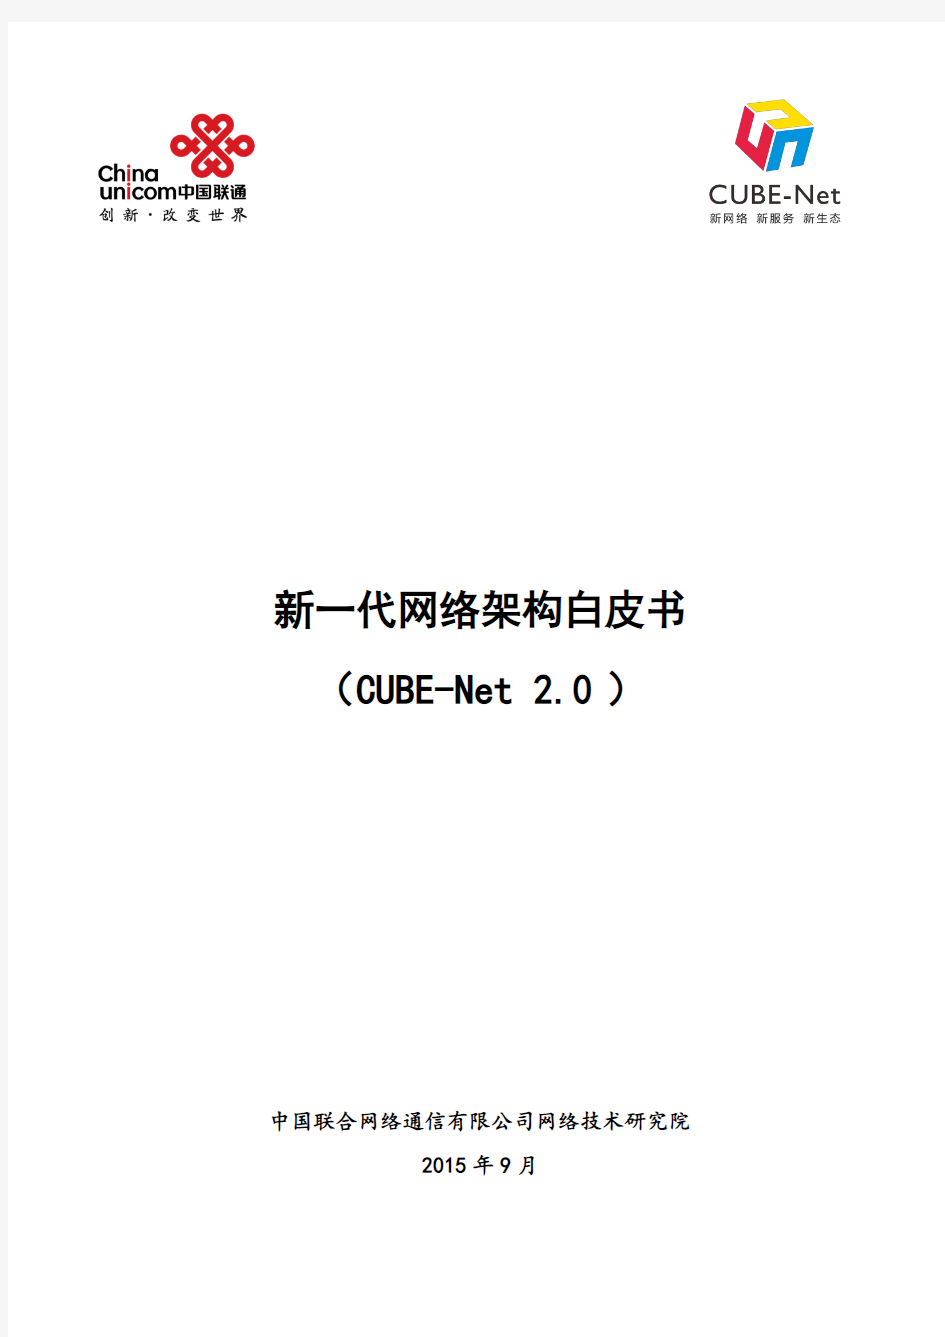 CUBE Net v2.0-白皮书-正式发布版(20150922)